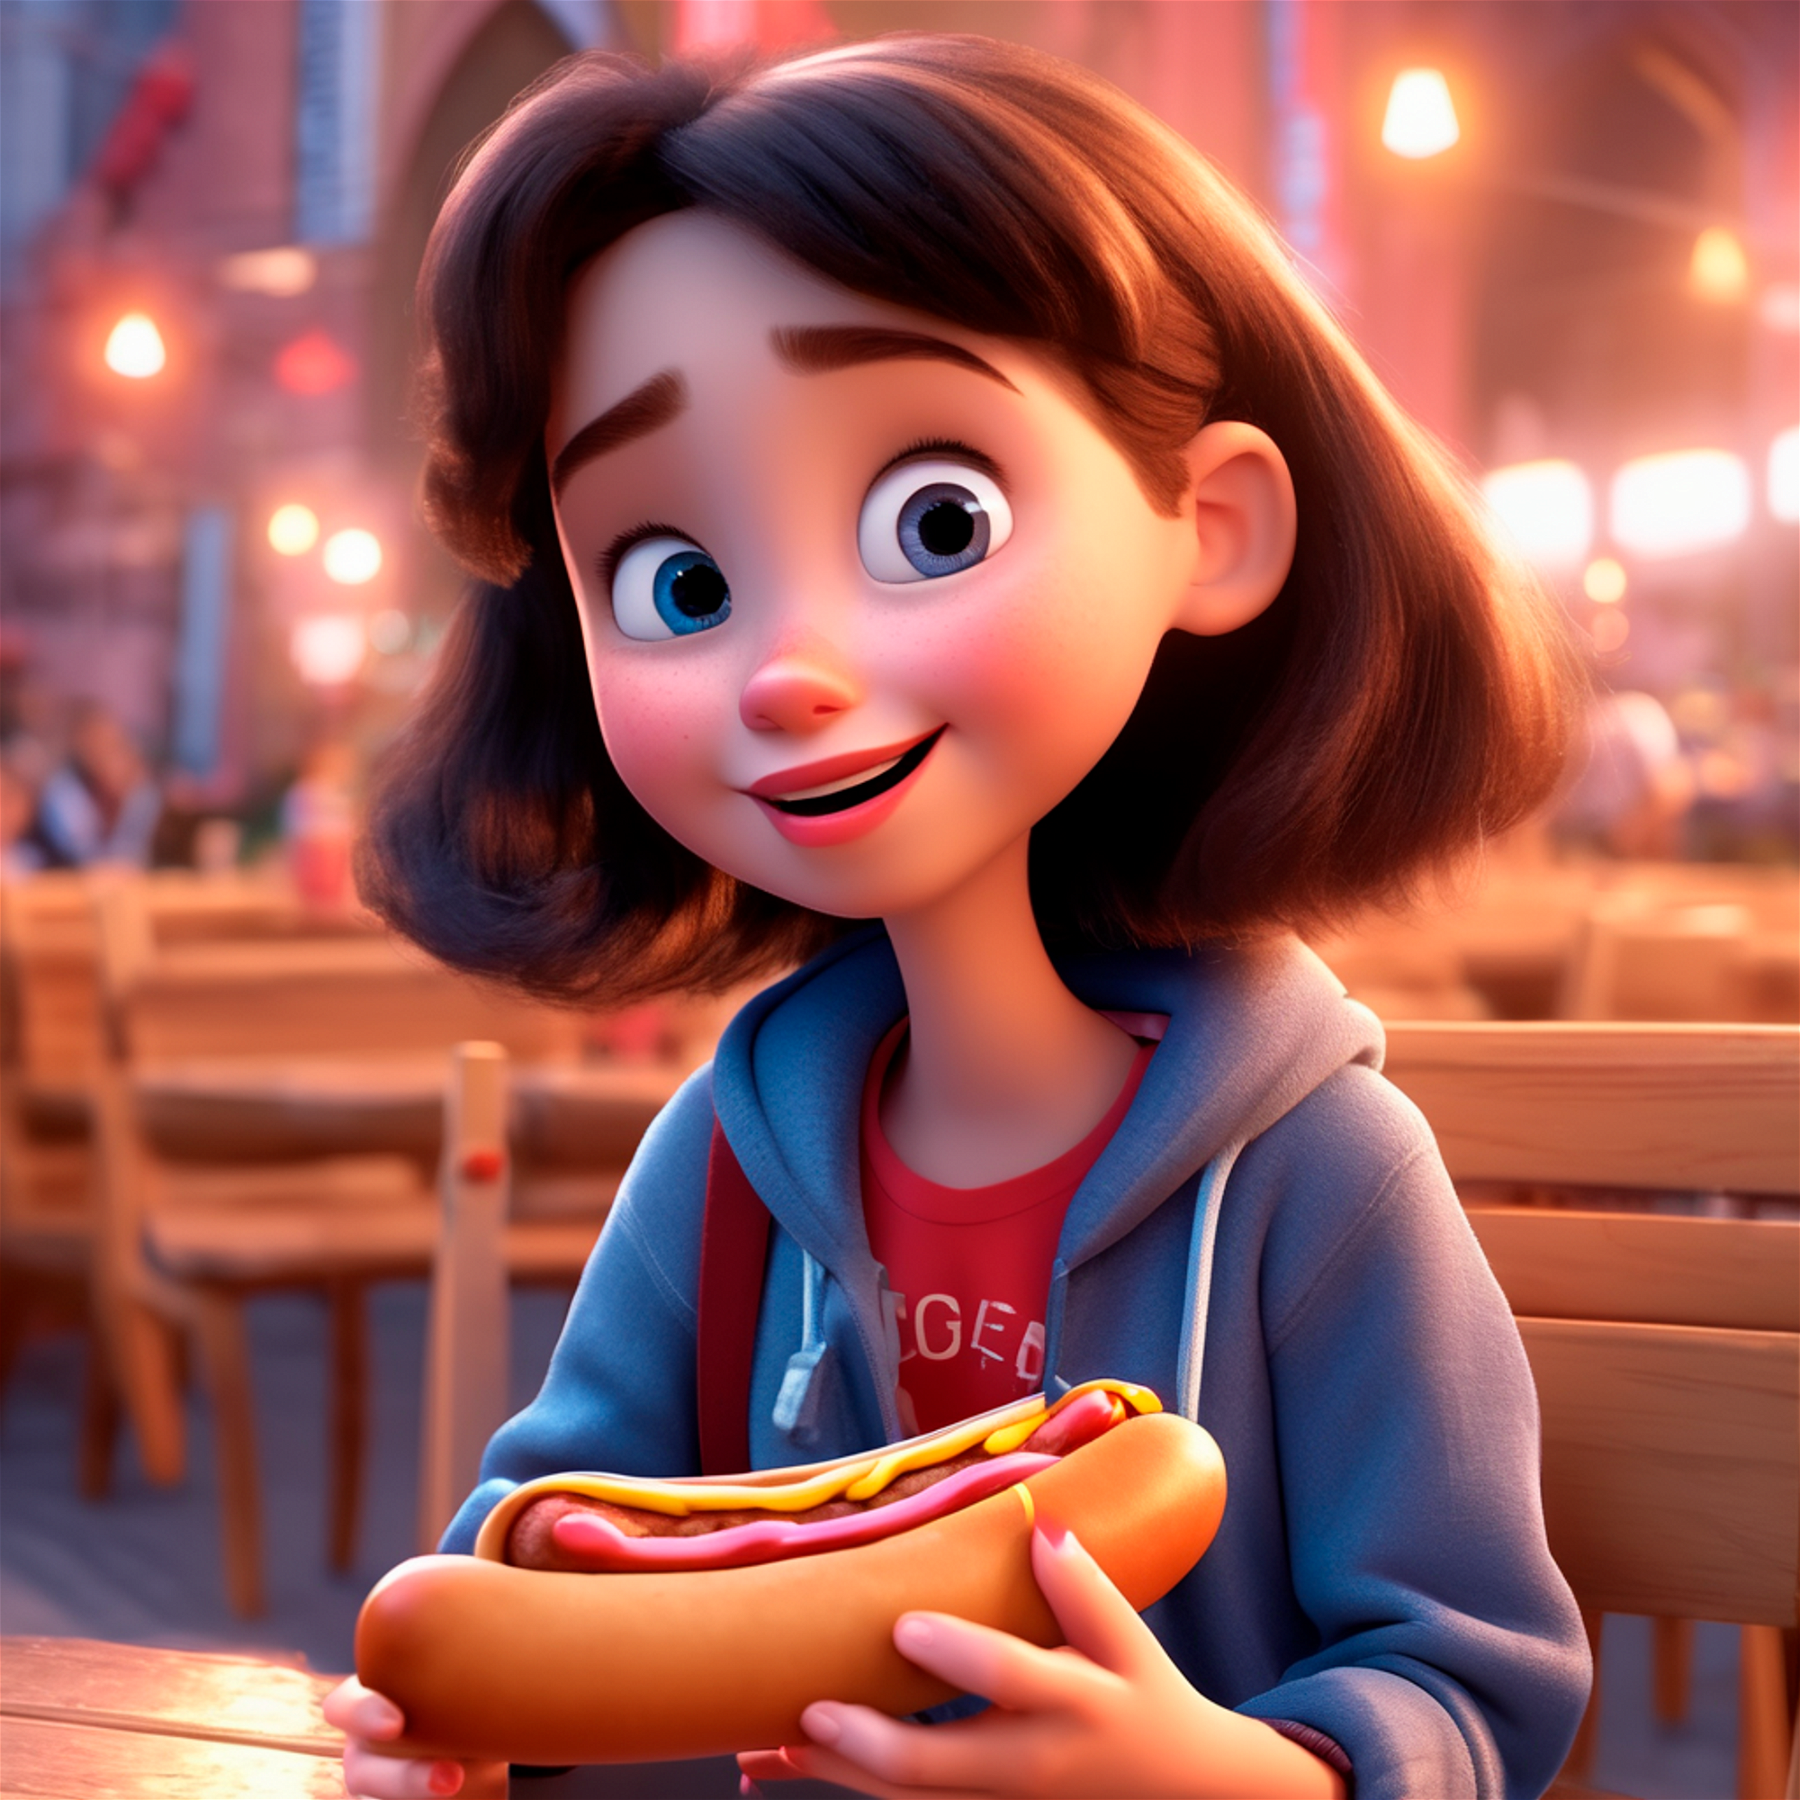 A cute girl eating a hotdog, Disney pixar 3D animation.